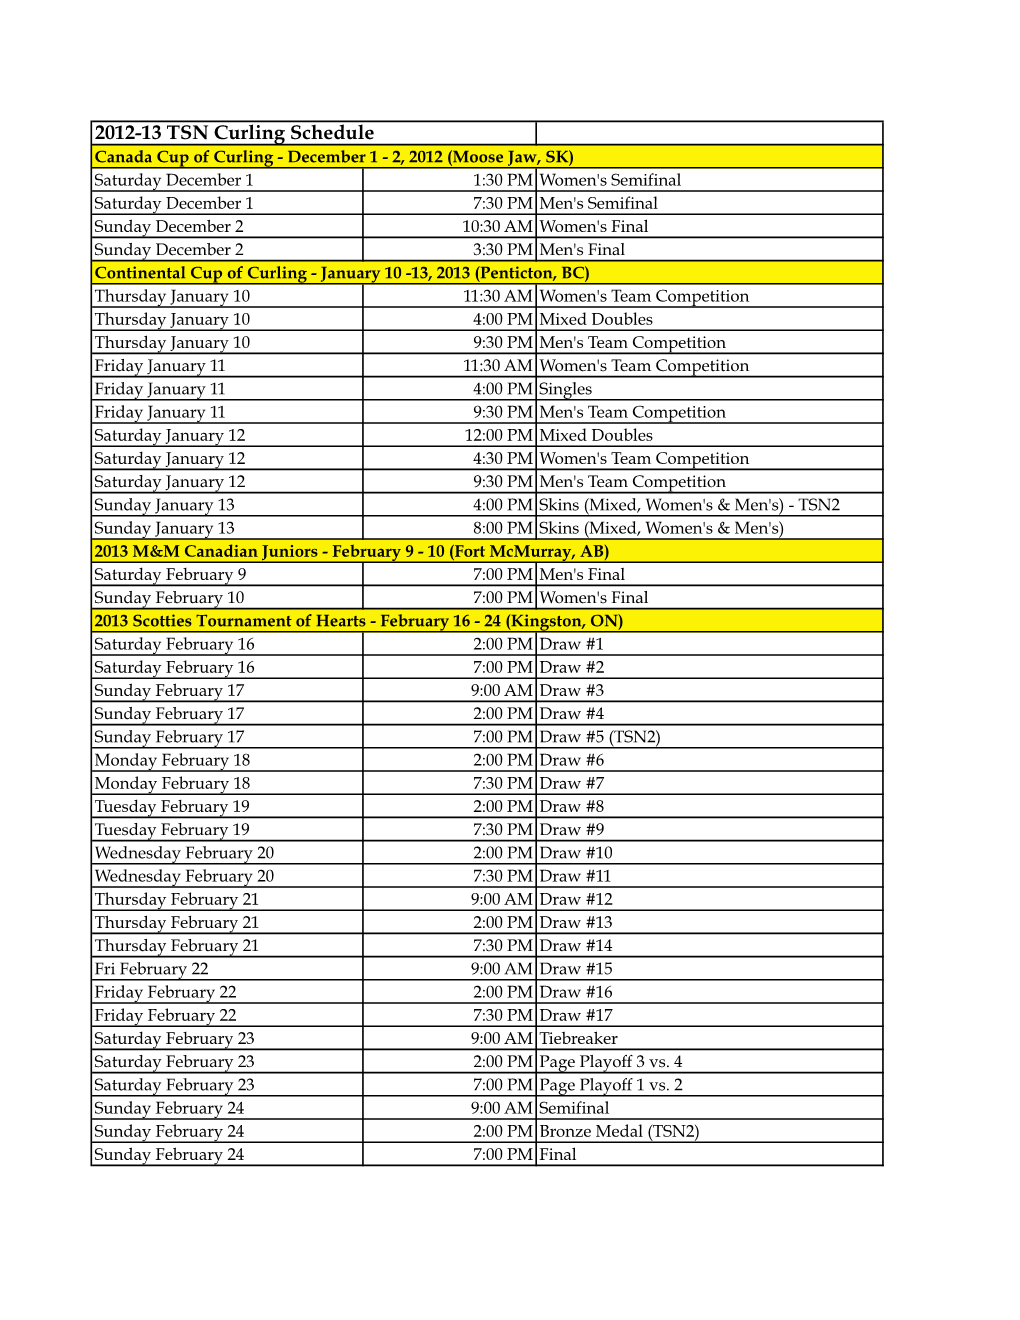 2012-13 Season of Champions Curling Schedule.Xlsx